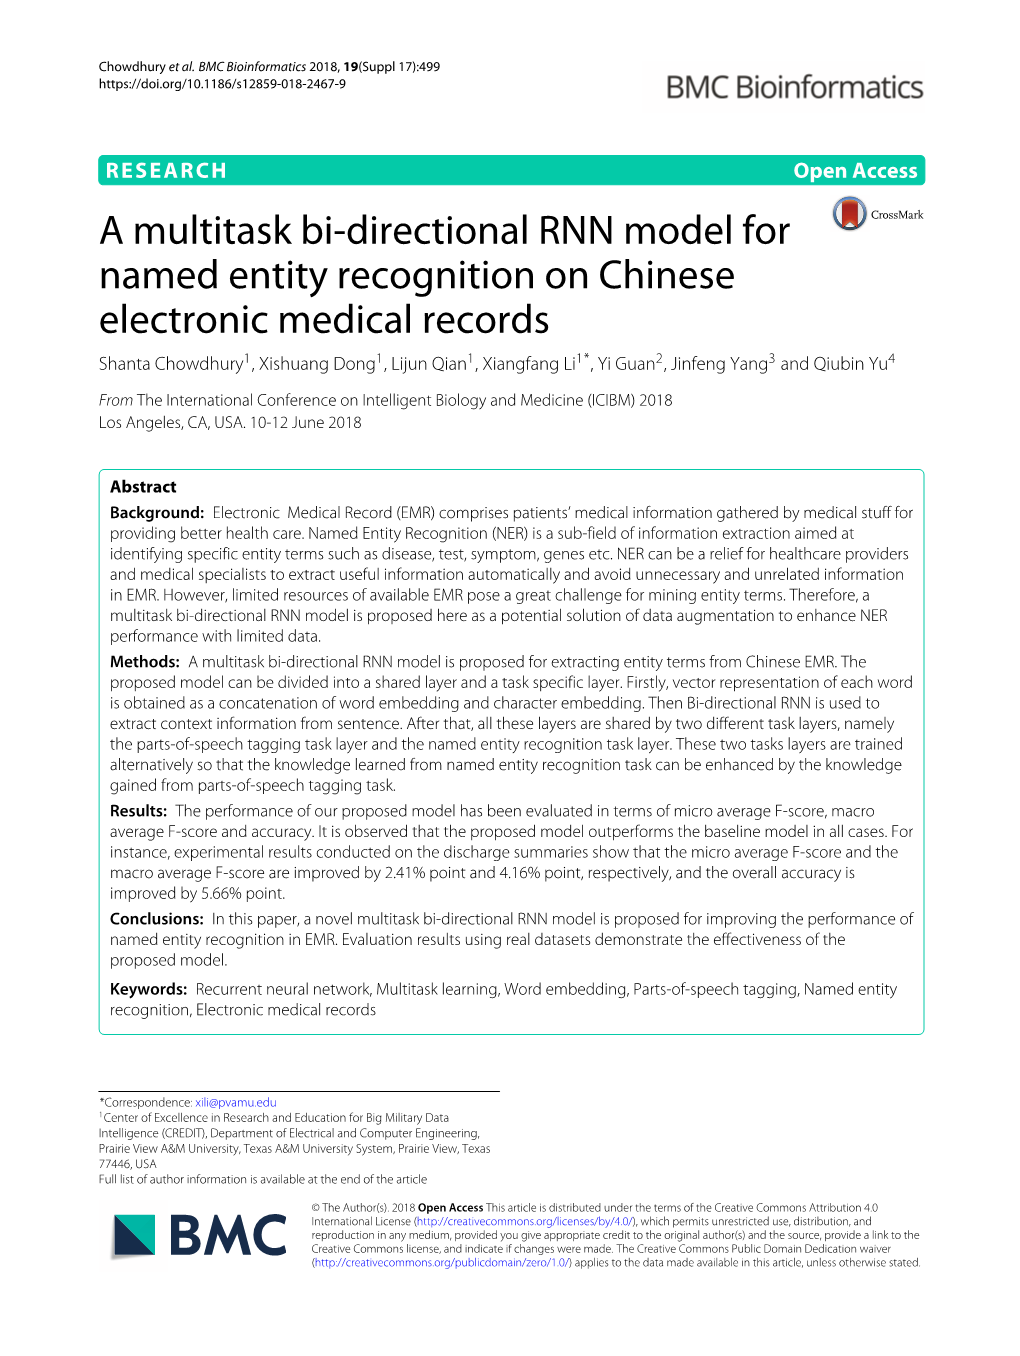 A Multitask Bi-Directional RNN Model for Named Entity Recognition On